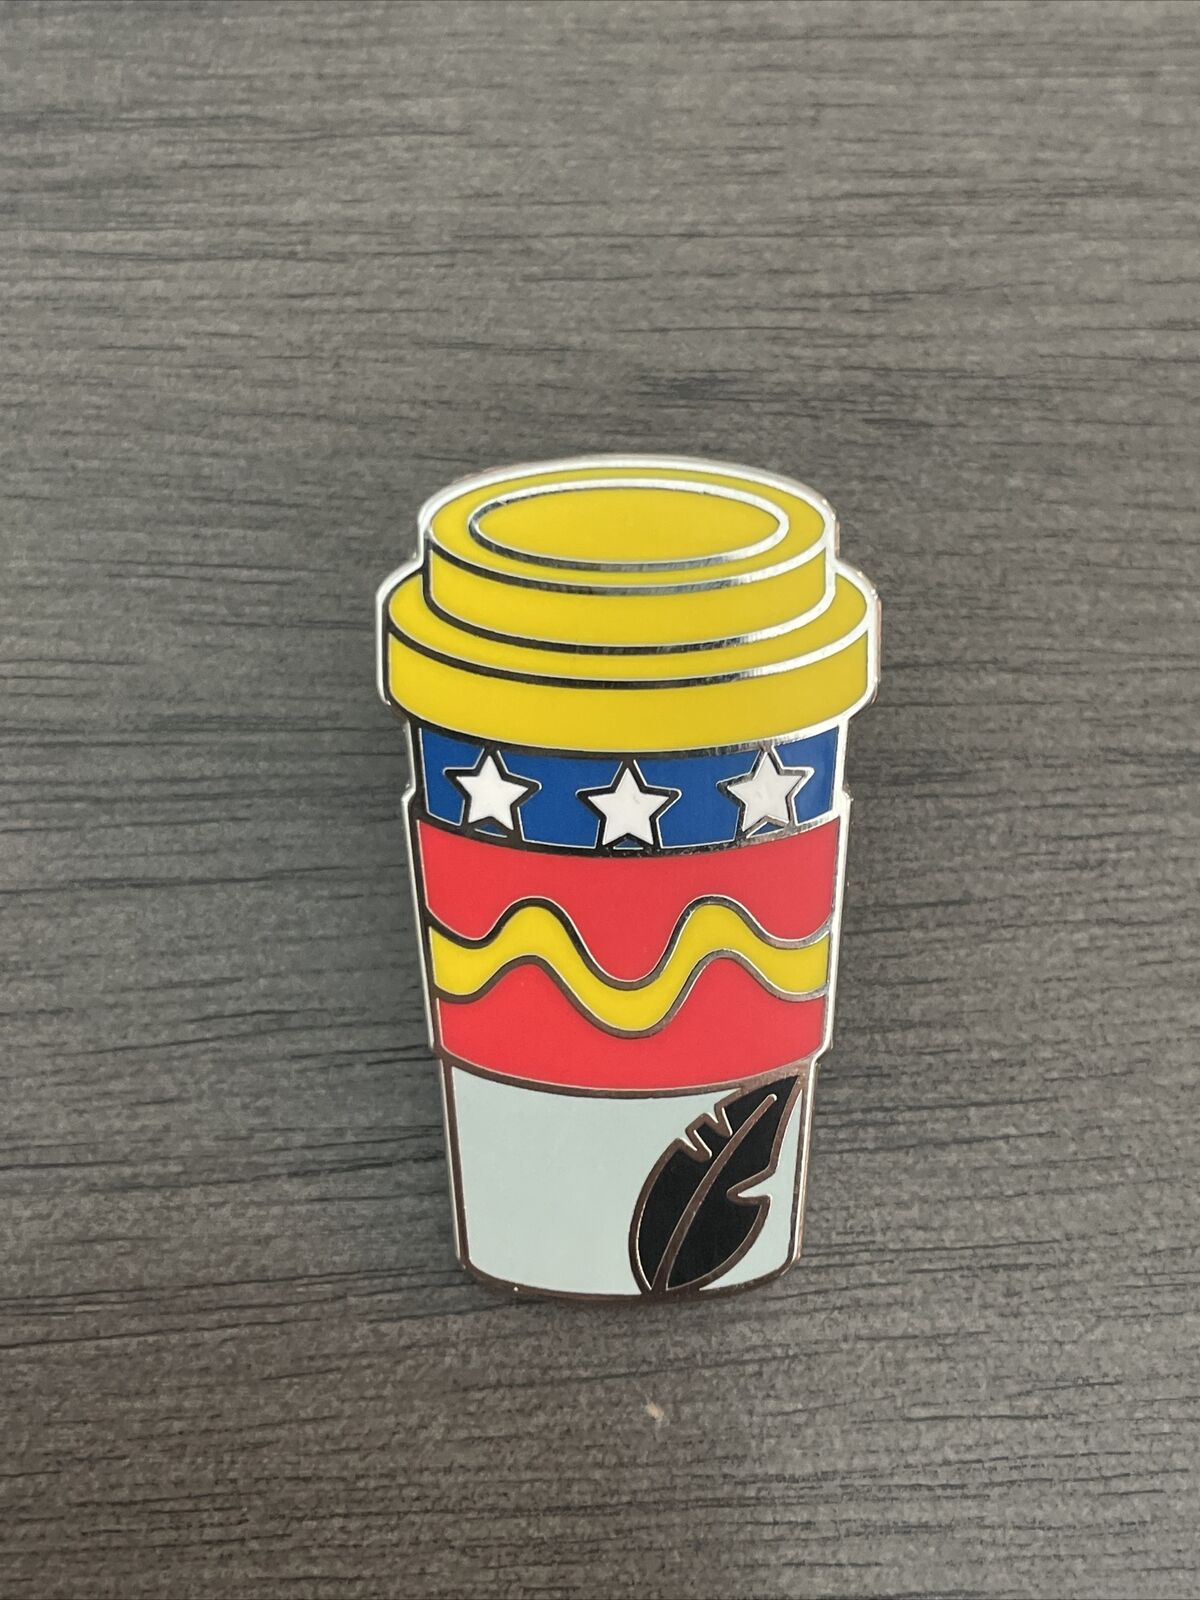 WDW Dumbo Coffee Cup Mystery Disney Pin 2021